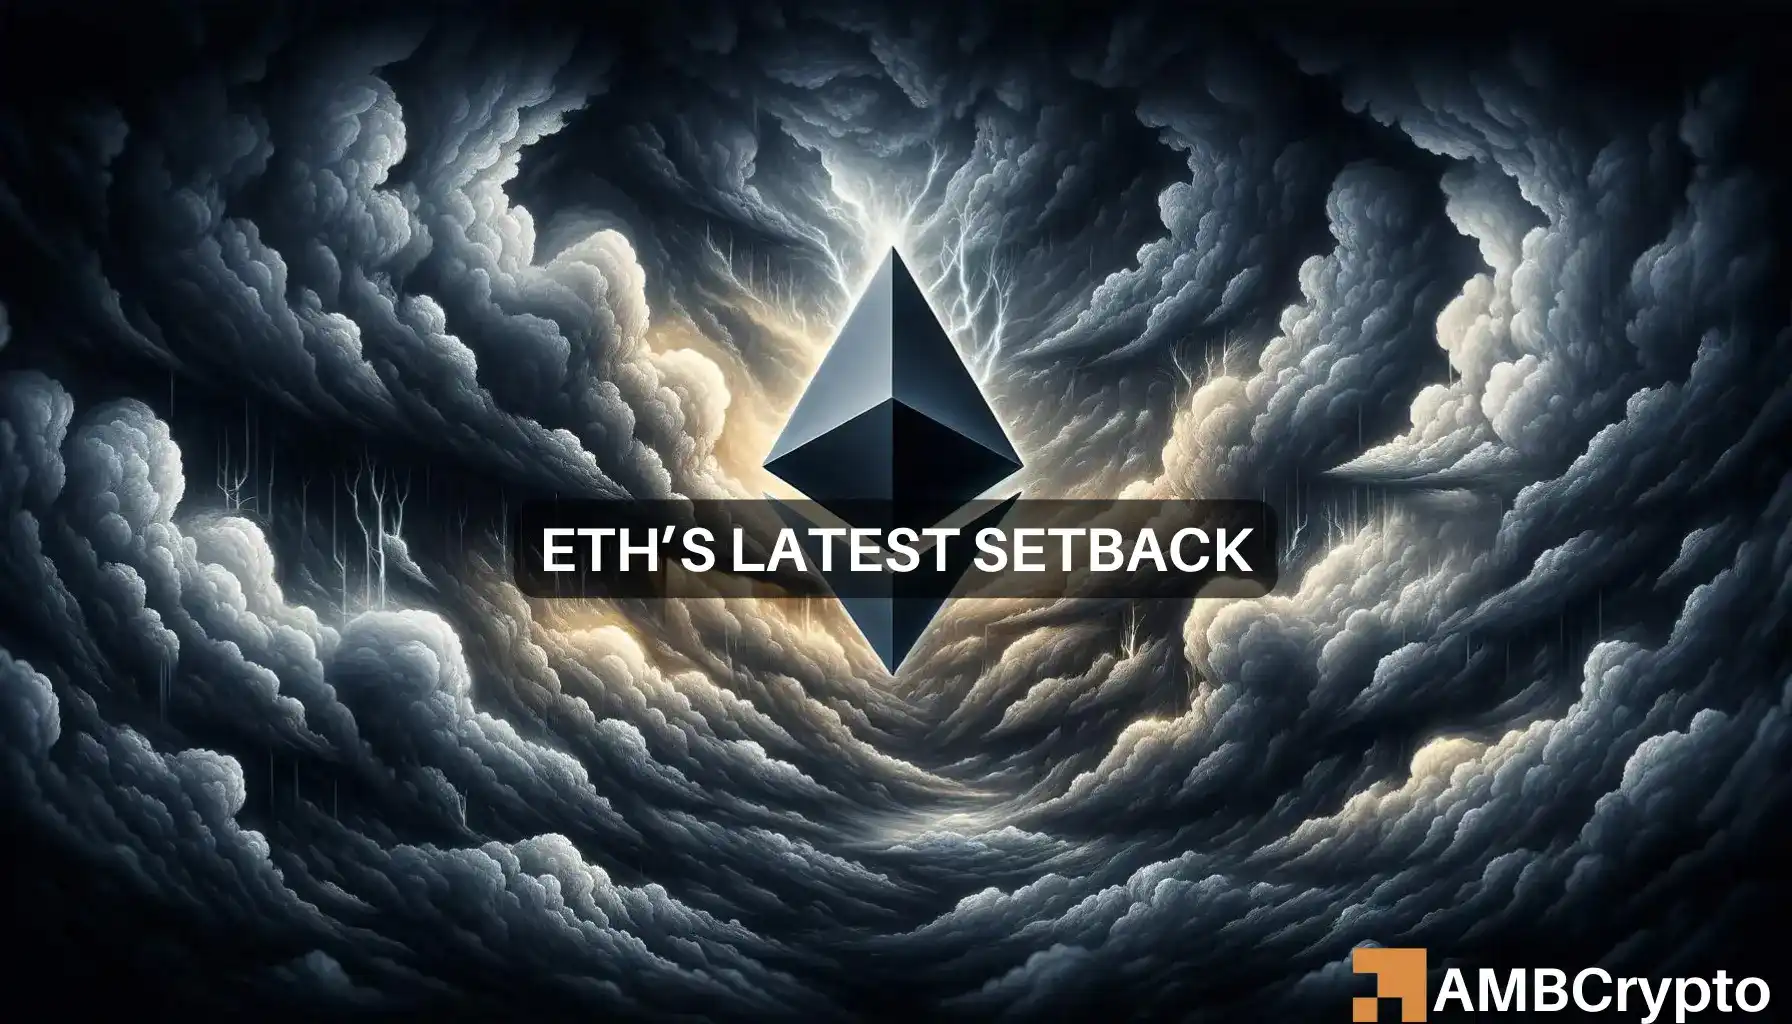 Ethereum's 'failed' breakout - When will ETH's price breach $3.5K?